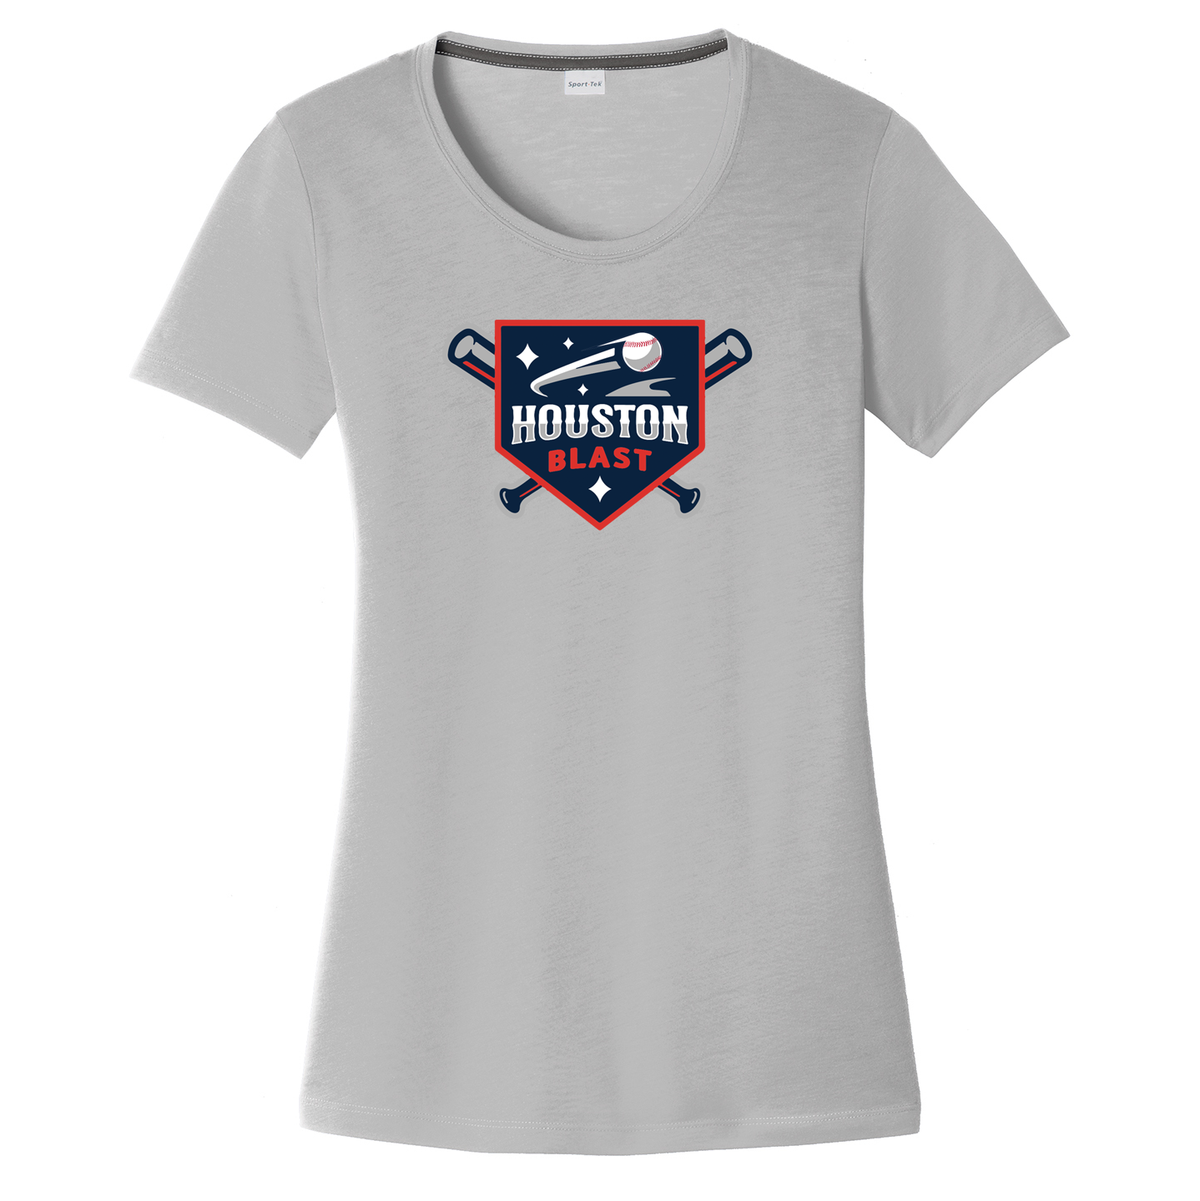 Houston Blast Baseball Women's CottonTouch Performance T-Shirt